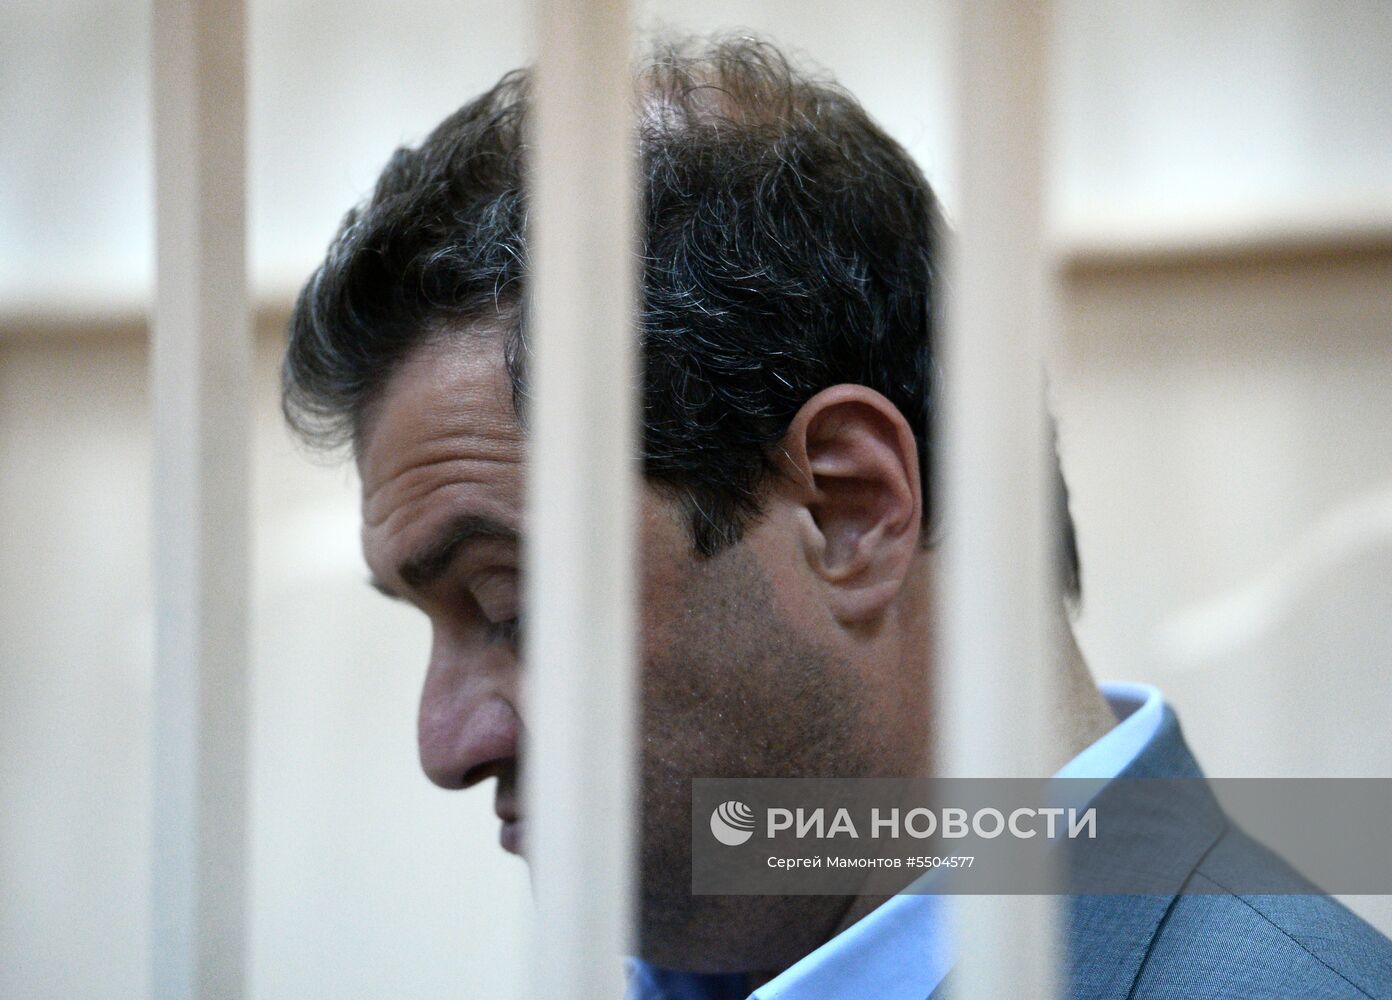 Рассмотрение ходатайства следствия об аресте Г. Пирумова и Н. Колесникова